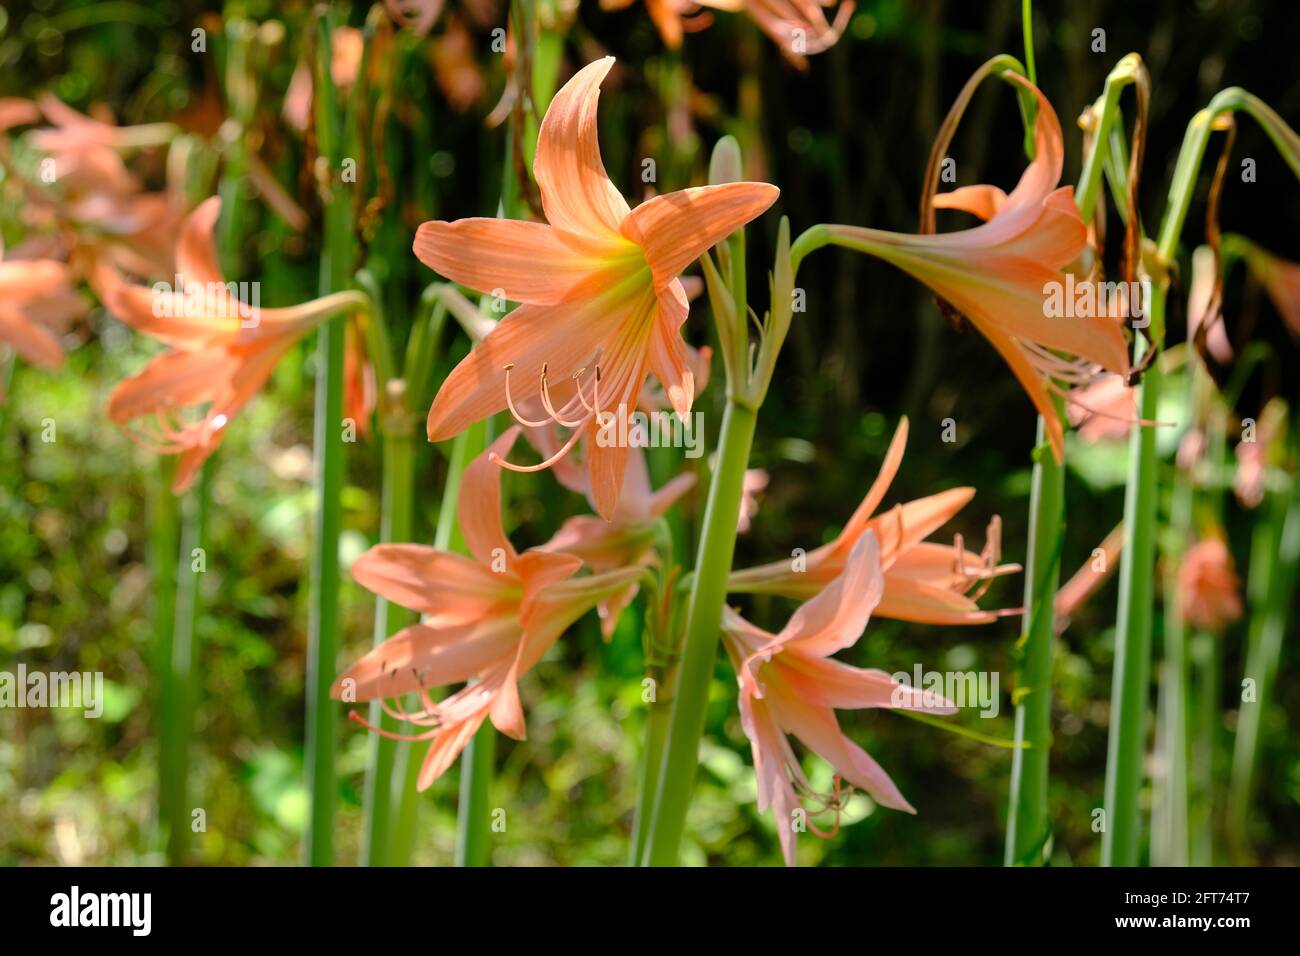 Indonesia Anambas Islands - Group of Wild Amaryllis flowers - Amaryllis belladonna Stock Photo